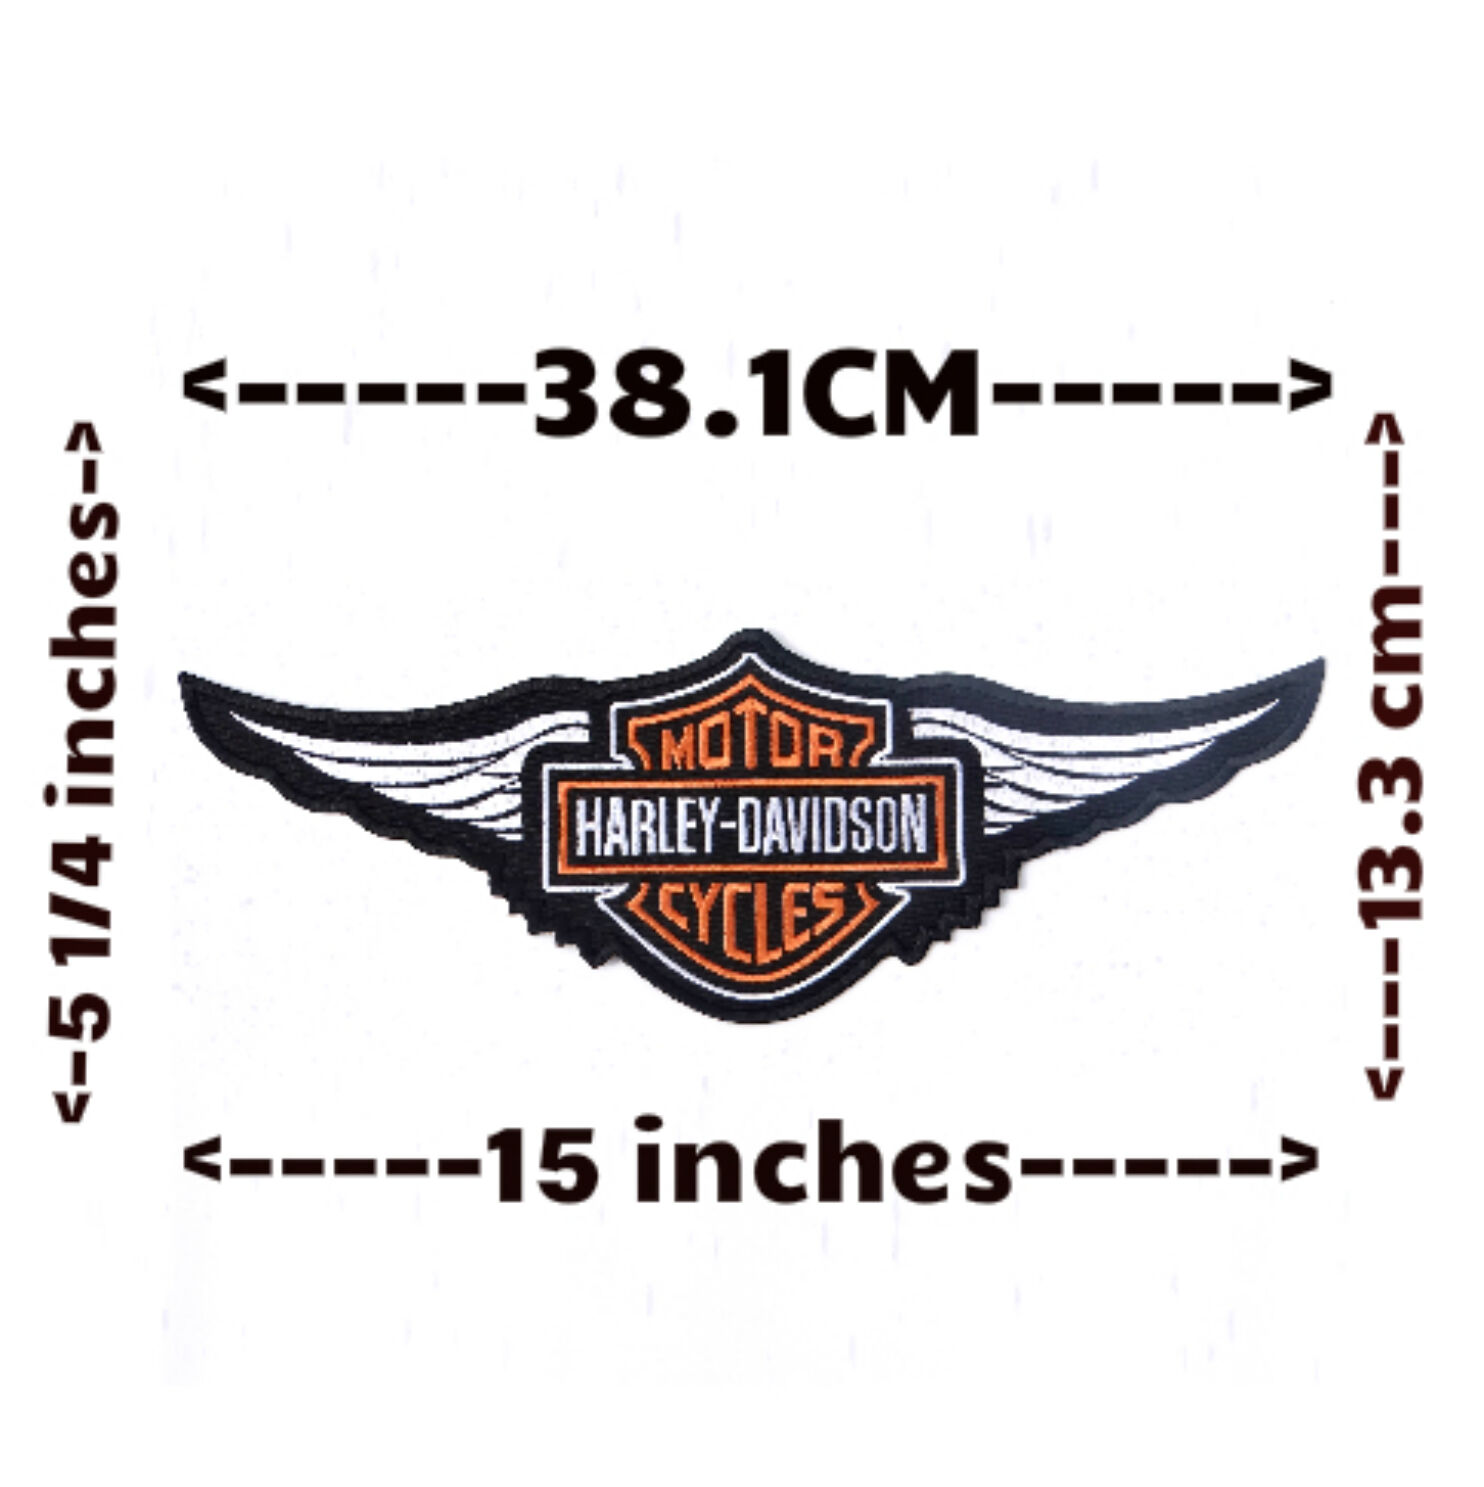 Harley Davidson Bar & Shield “Large” Patch “Ships International” 